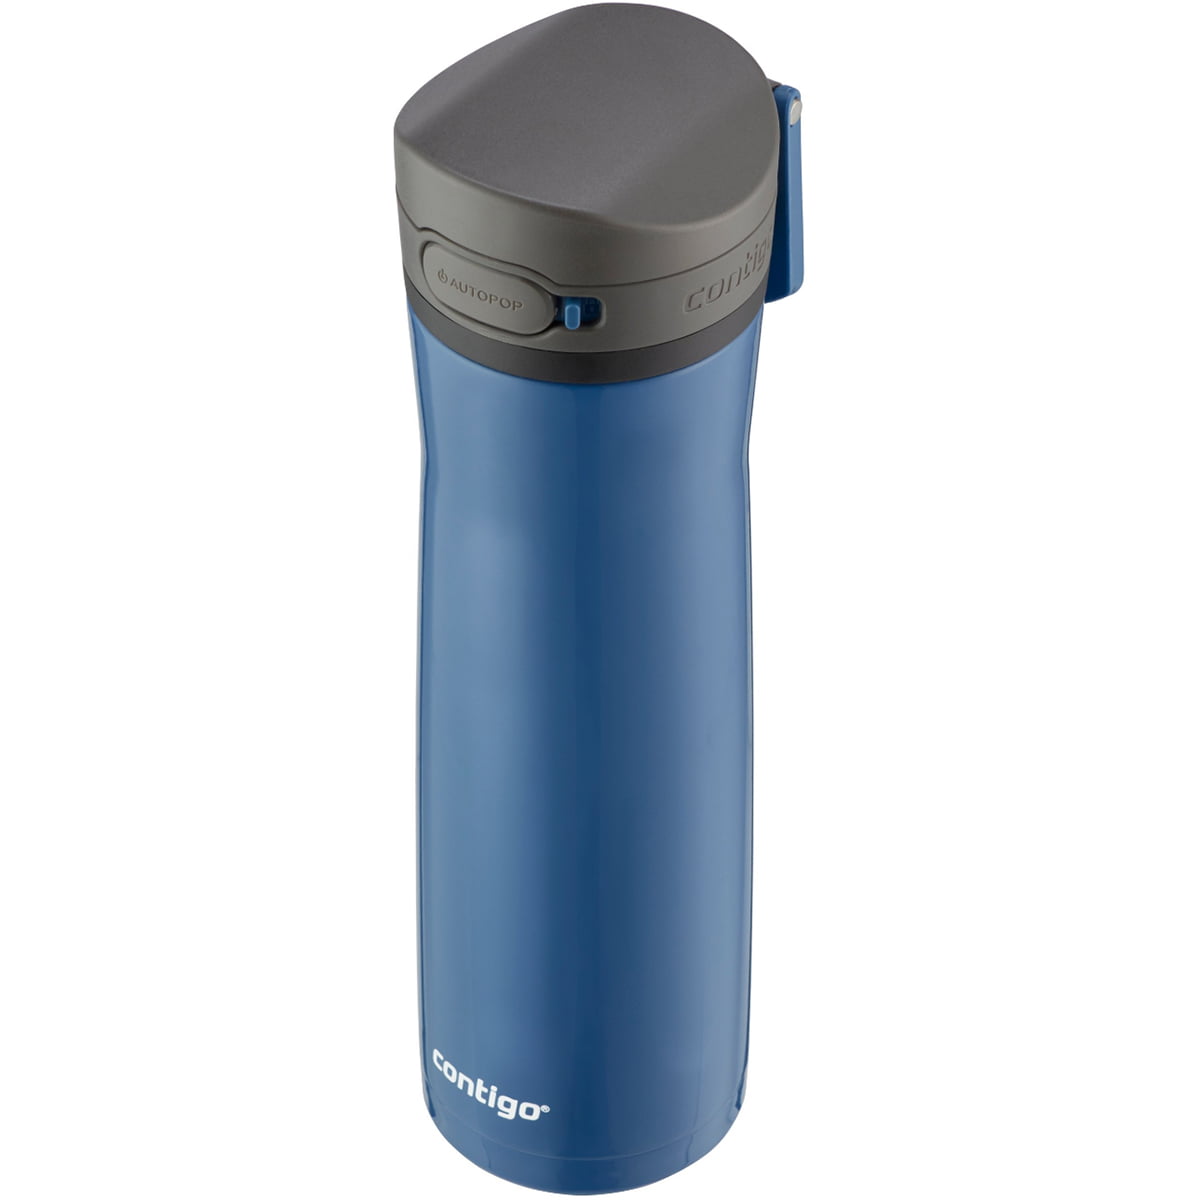 Contigo Autoseal Technology Spill-Proof Water Bottle - 28 Hours Cold 24  oz/709mL